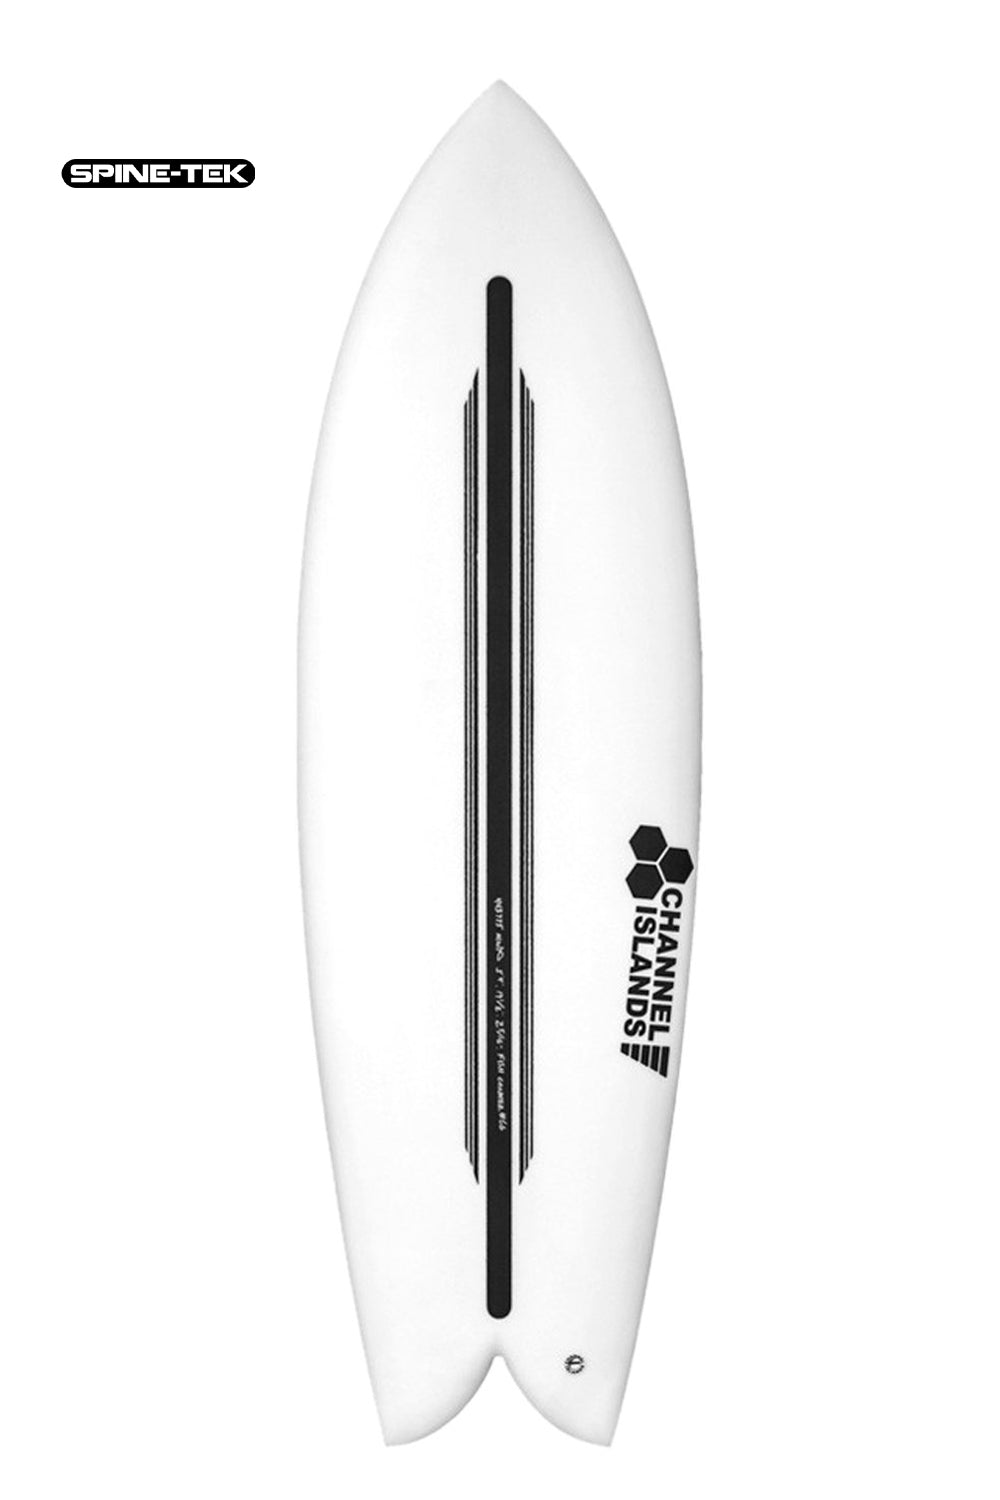 Channel Islands Fish Spine-Tek EPS Surfboard